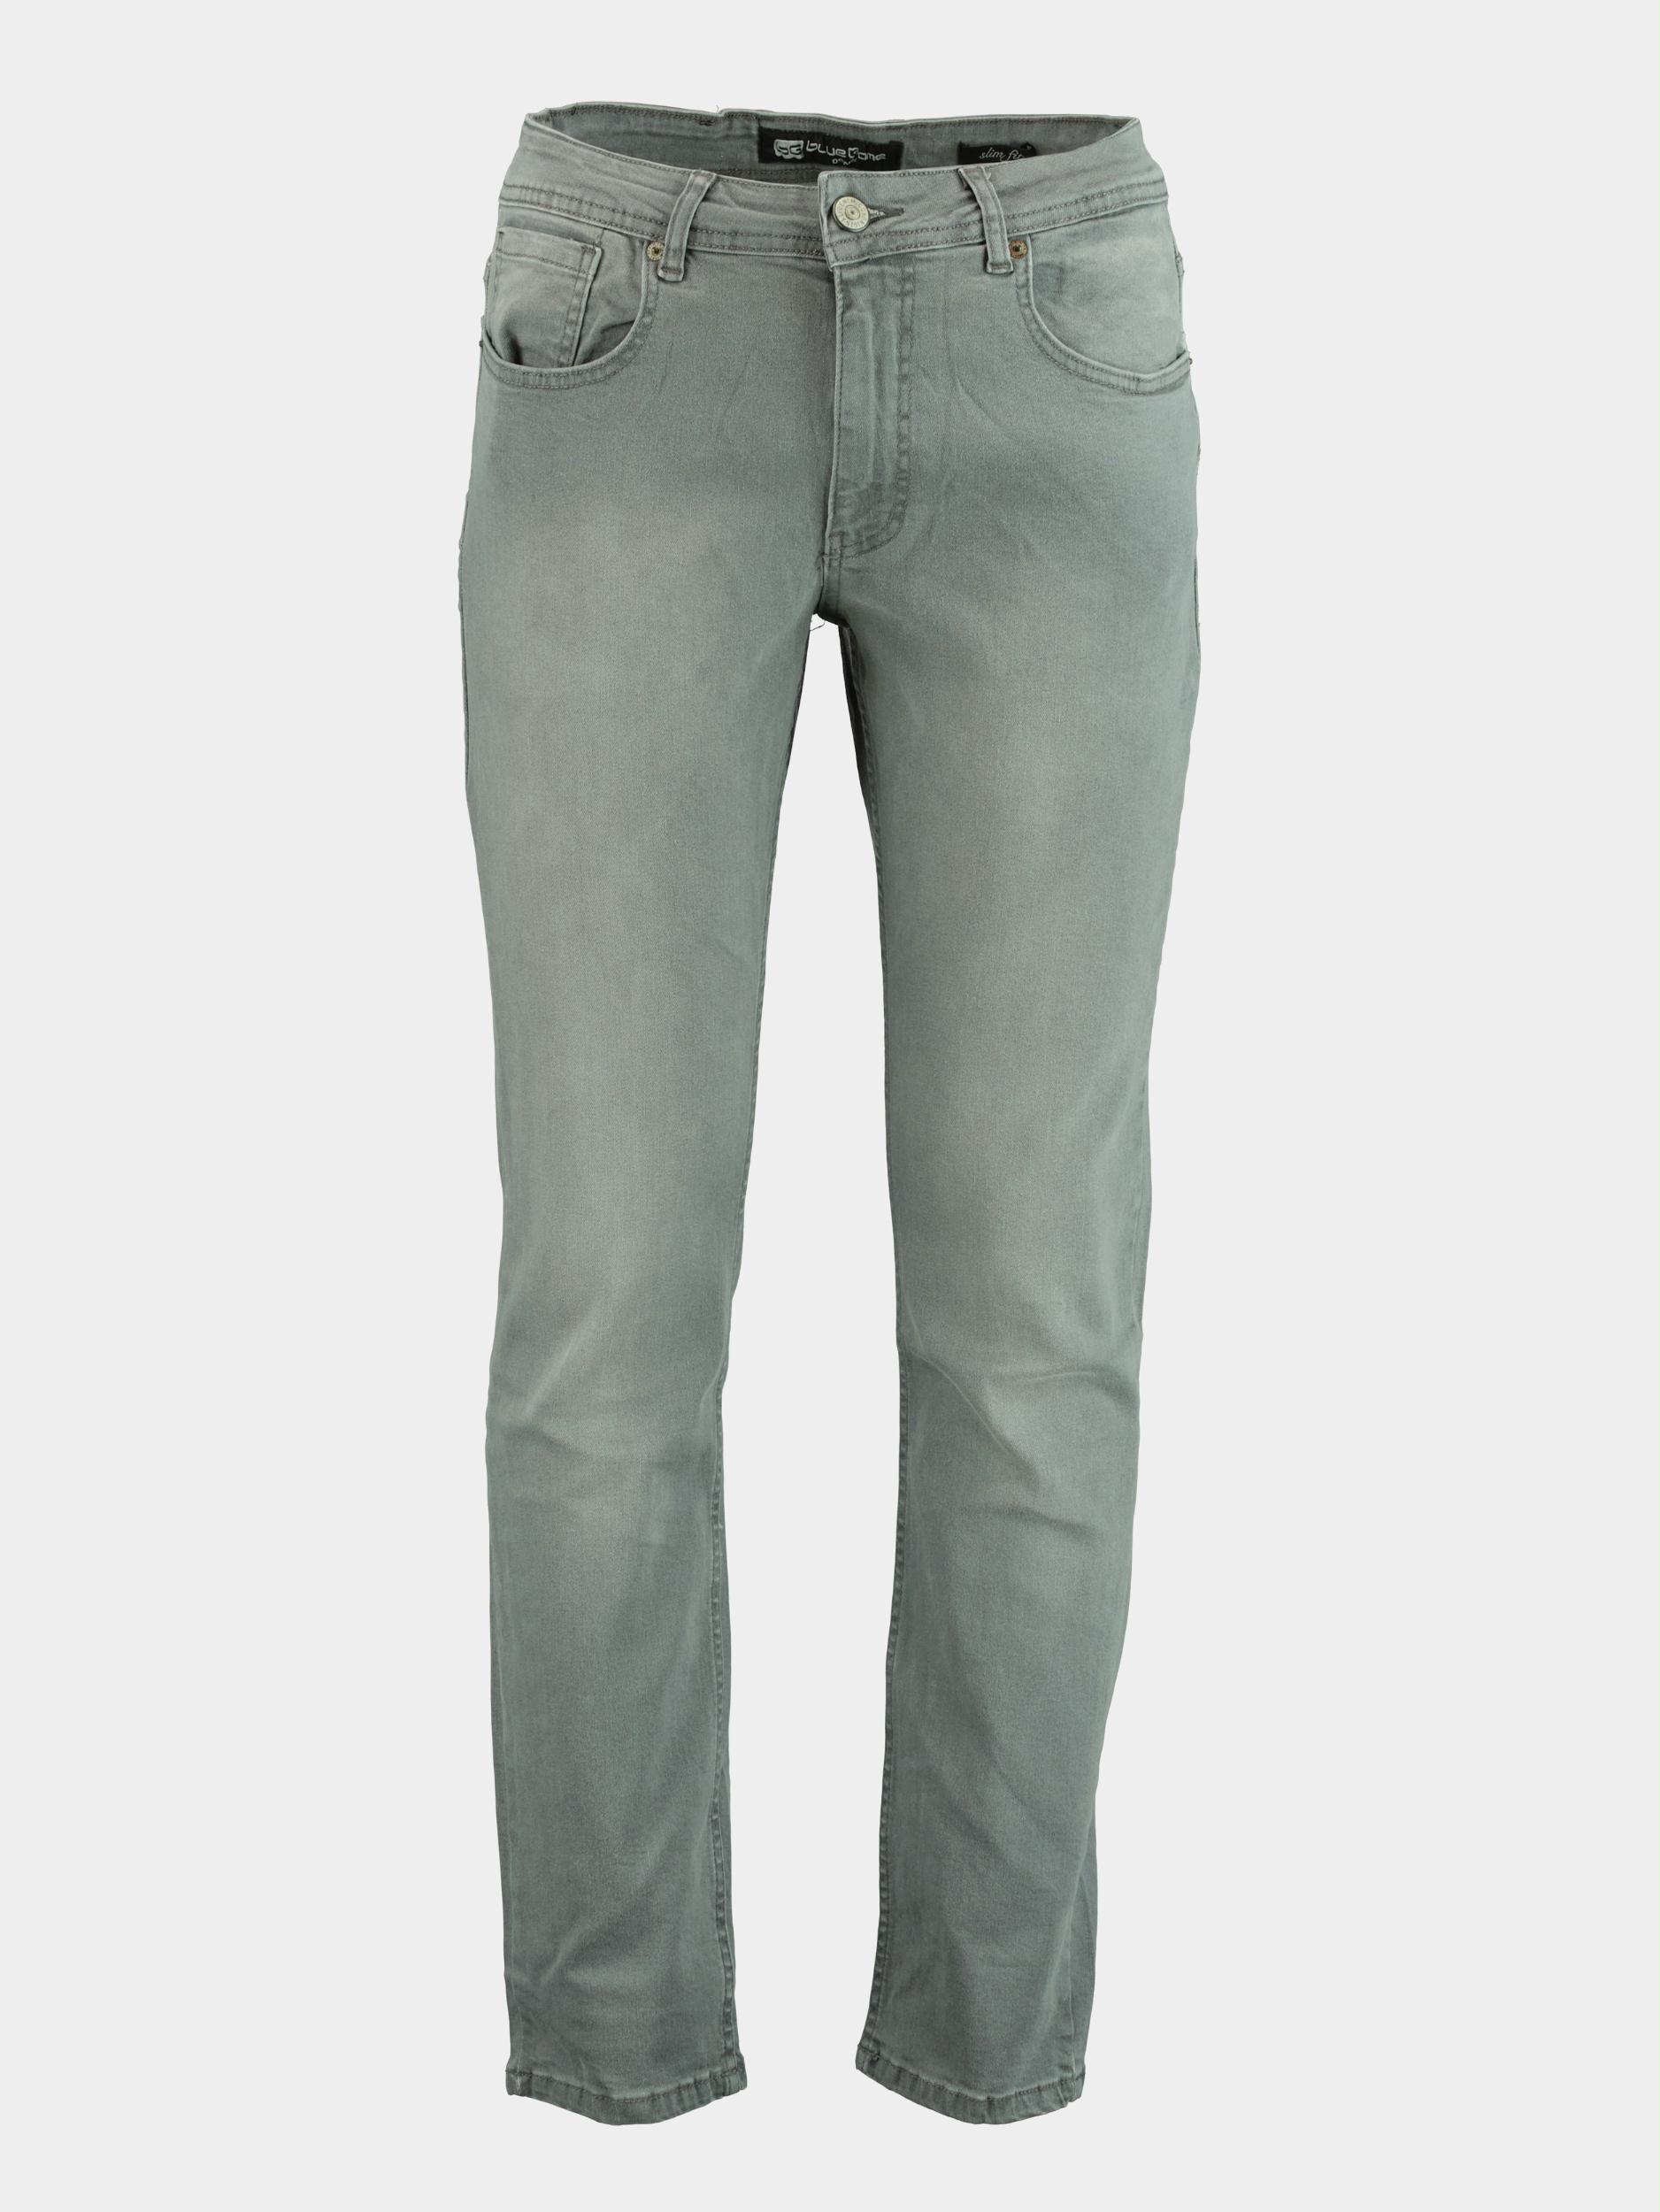 Afbeelding van Blue Game 5-pocket jeans 9002/light grey